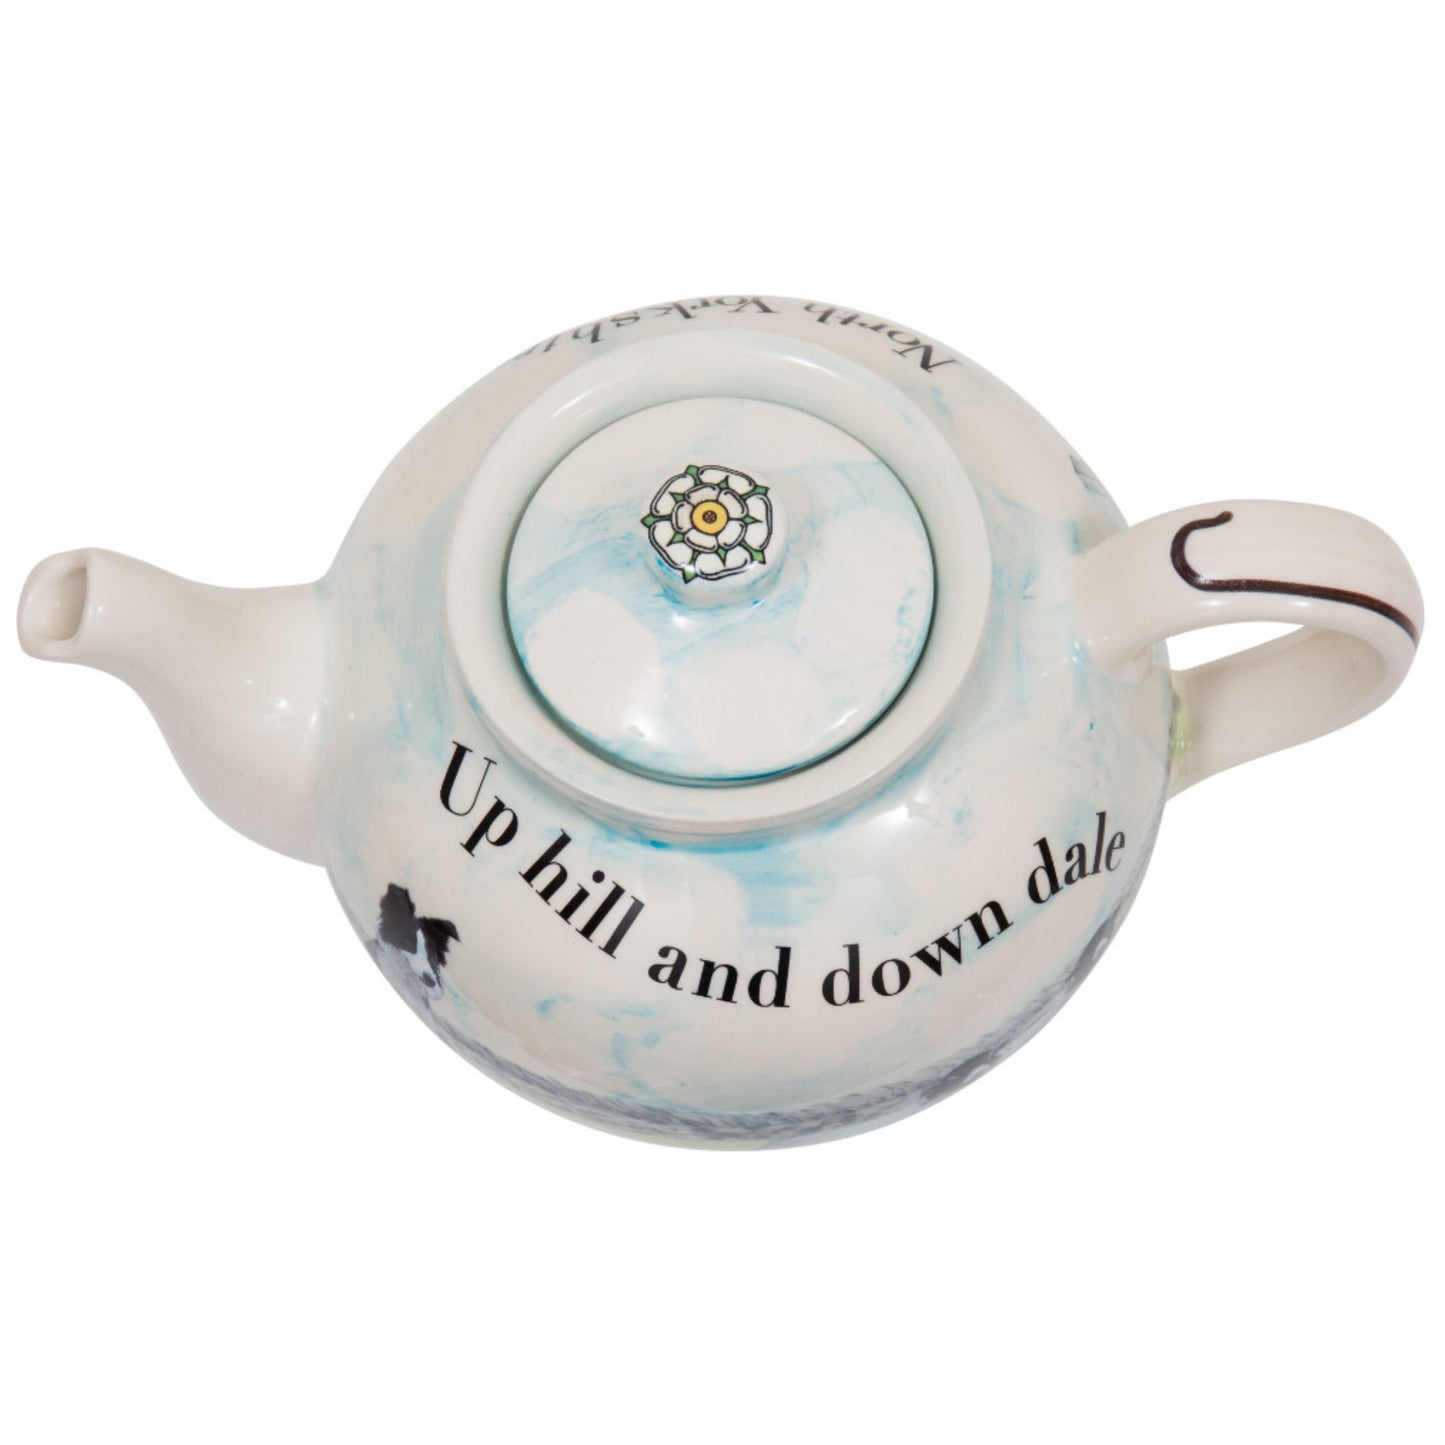 Yorkshire Dales Themed Medium Betty Tea Pot - The Great Yorkshire Shop